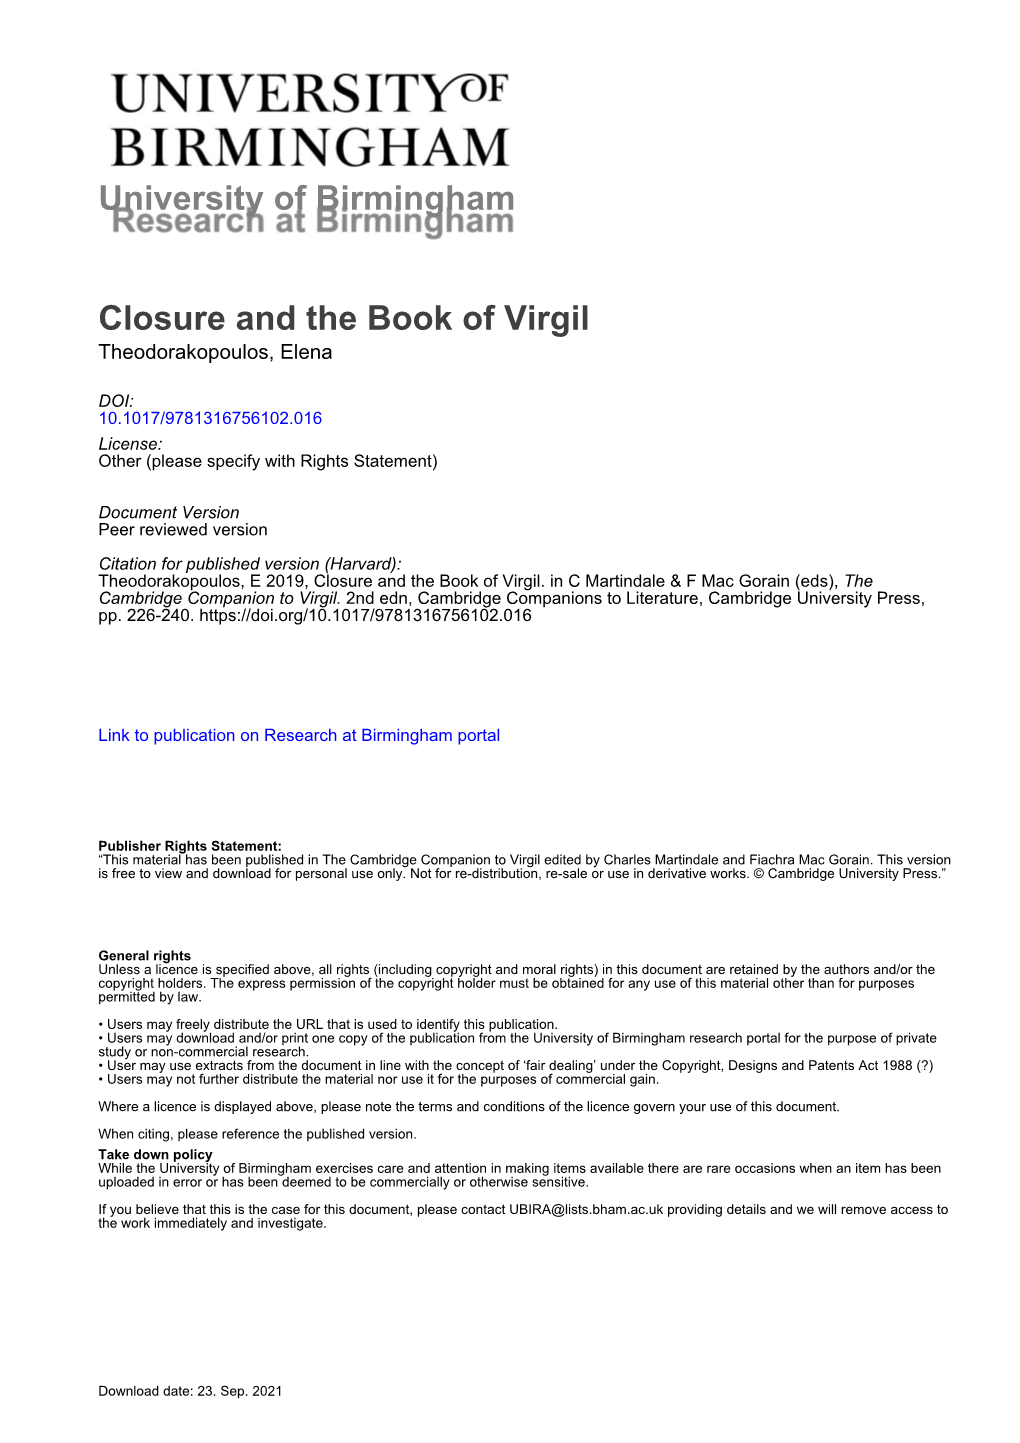 University of Birmingham Closure and the Book of Virgil